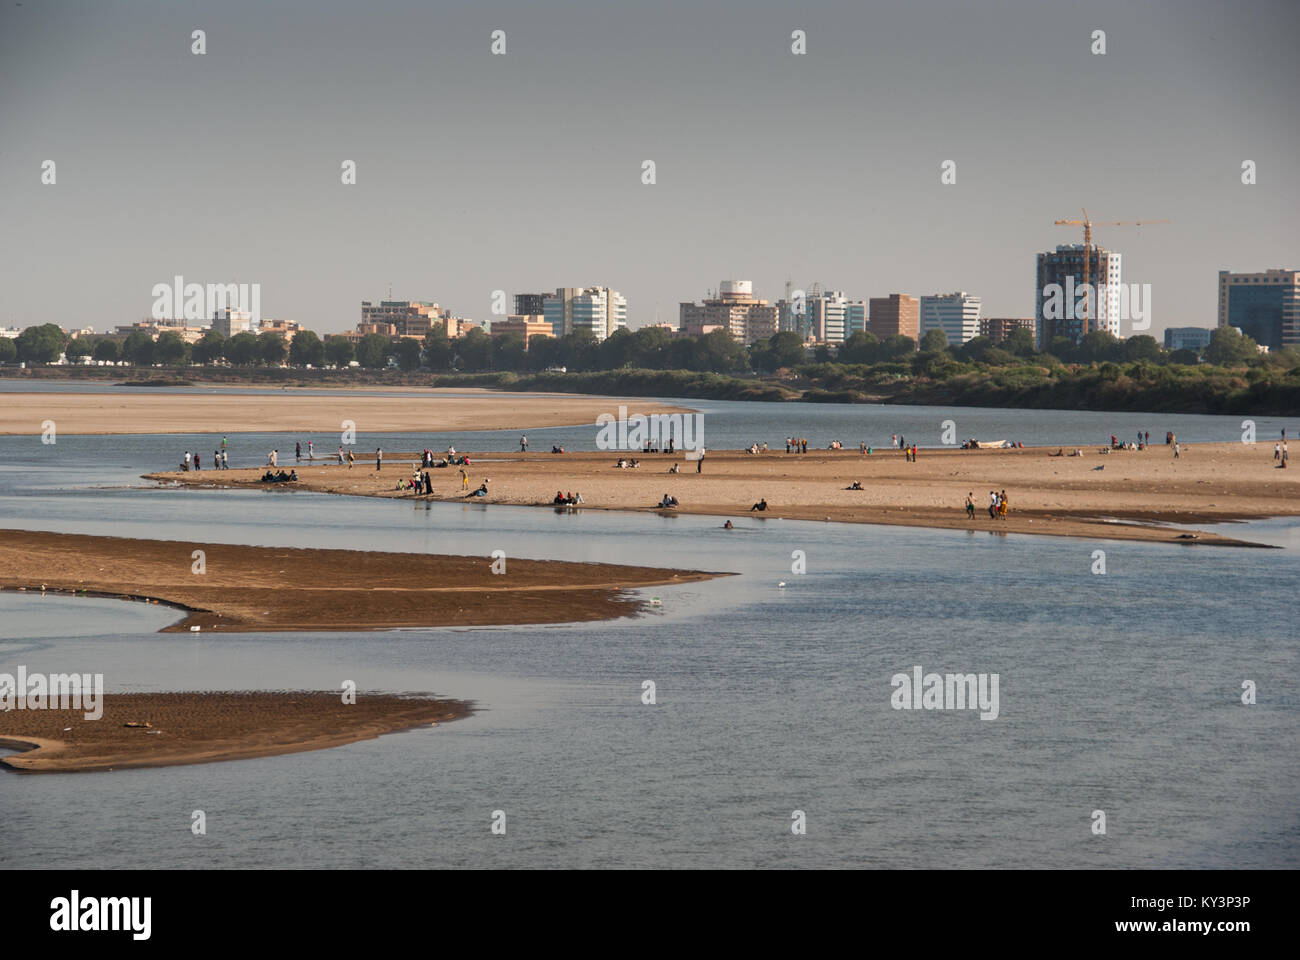 Nile, people and Khartoum seen from Tuti Island, Sudan Stock Photo